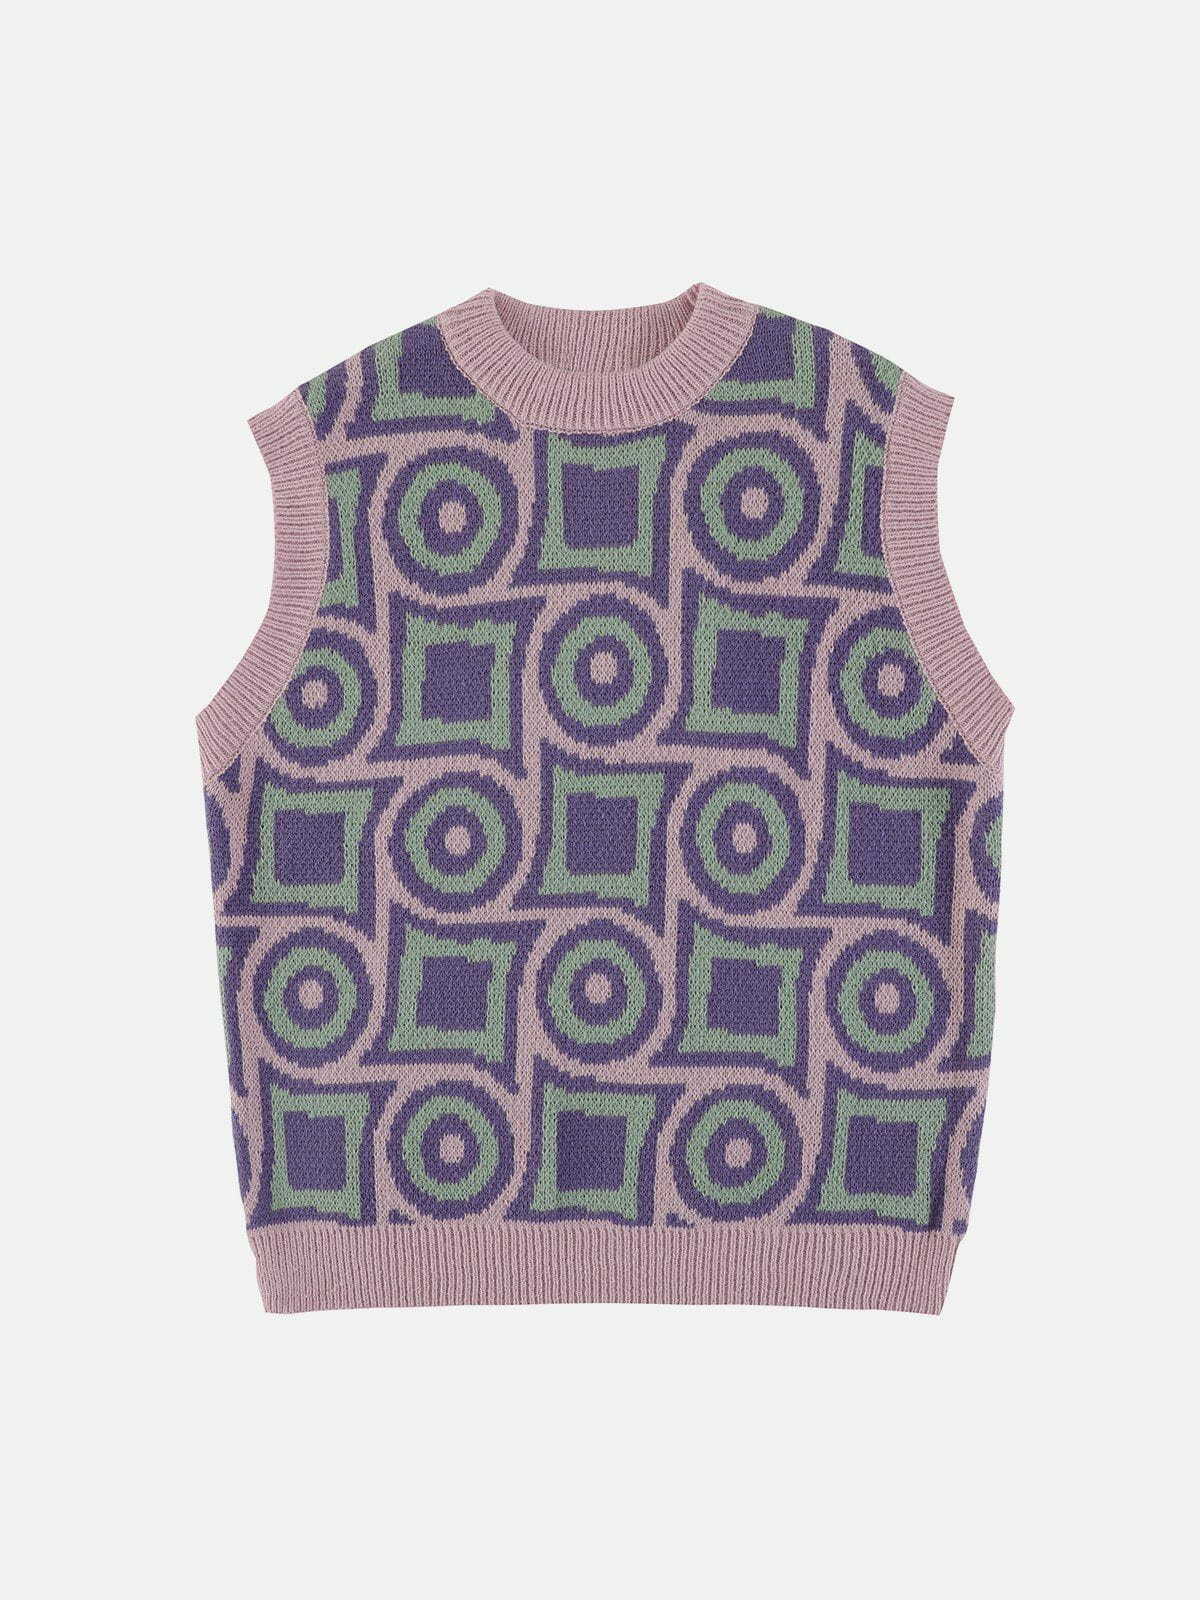 revolutionary geometric sweater vest edgy y2k streetwear essential 7081